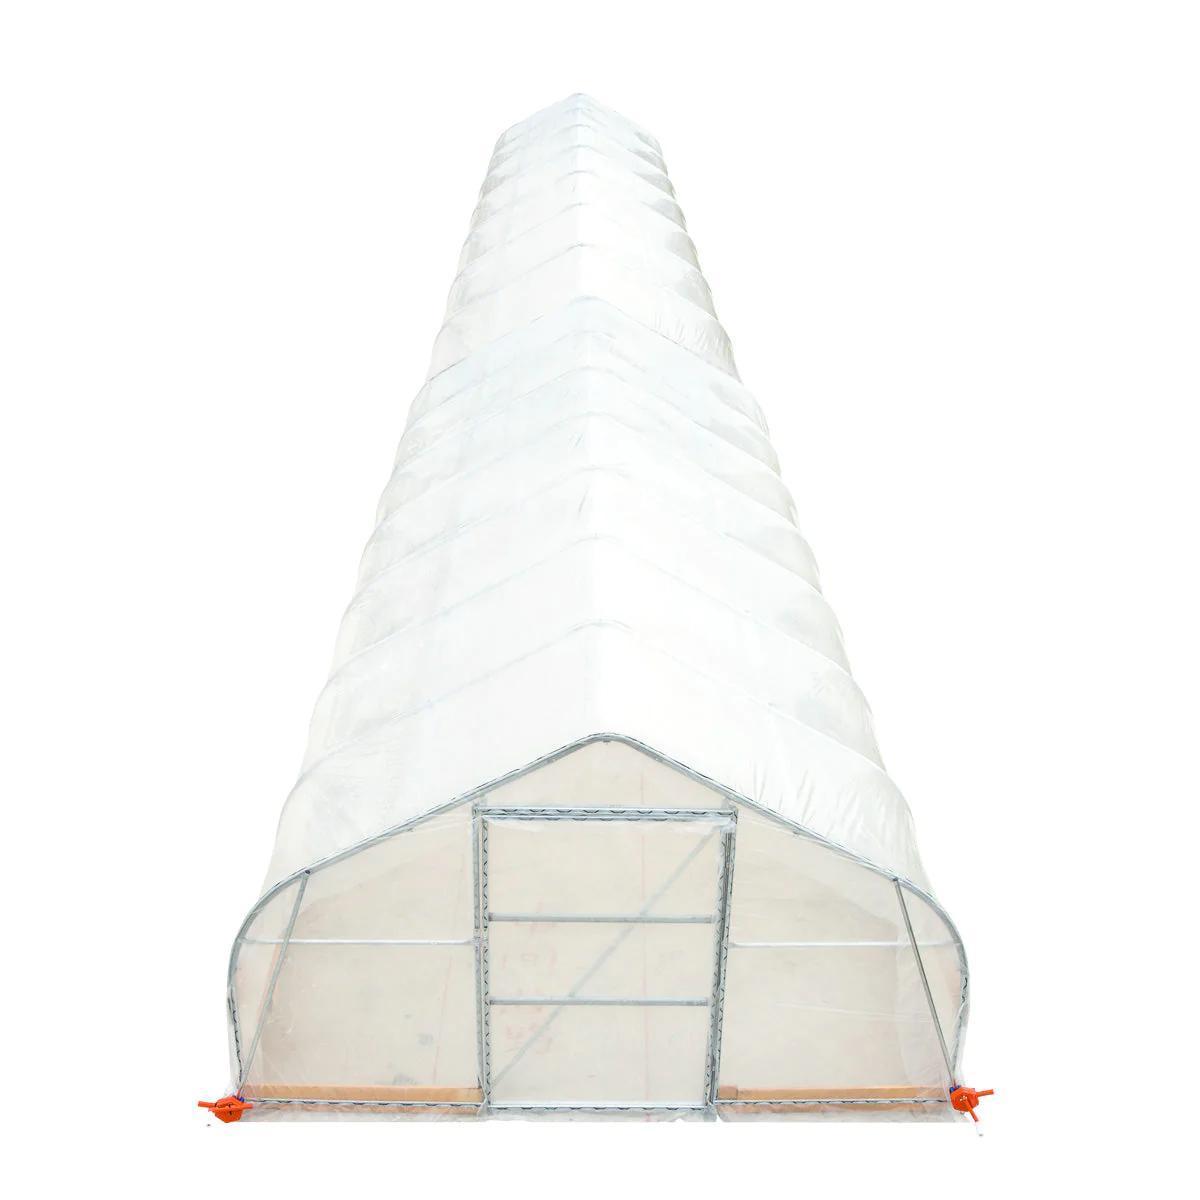 STORAGE BUILDING NEW TMG Industrial 12' x 60' Tunnel Greenhouse Grow Tent w/6 Mil Clear EVA Plastic